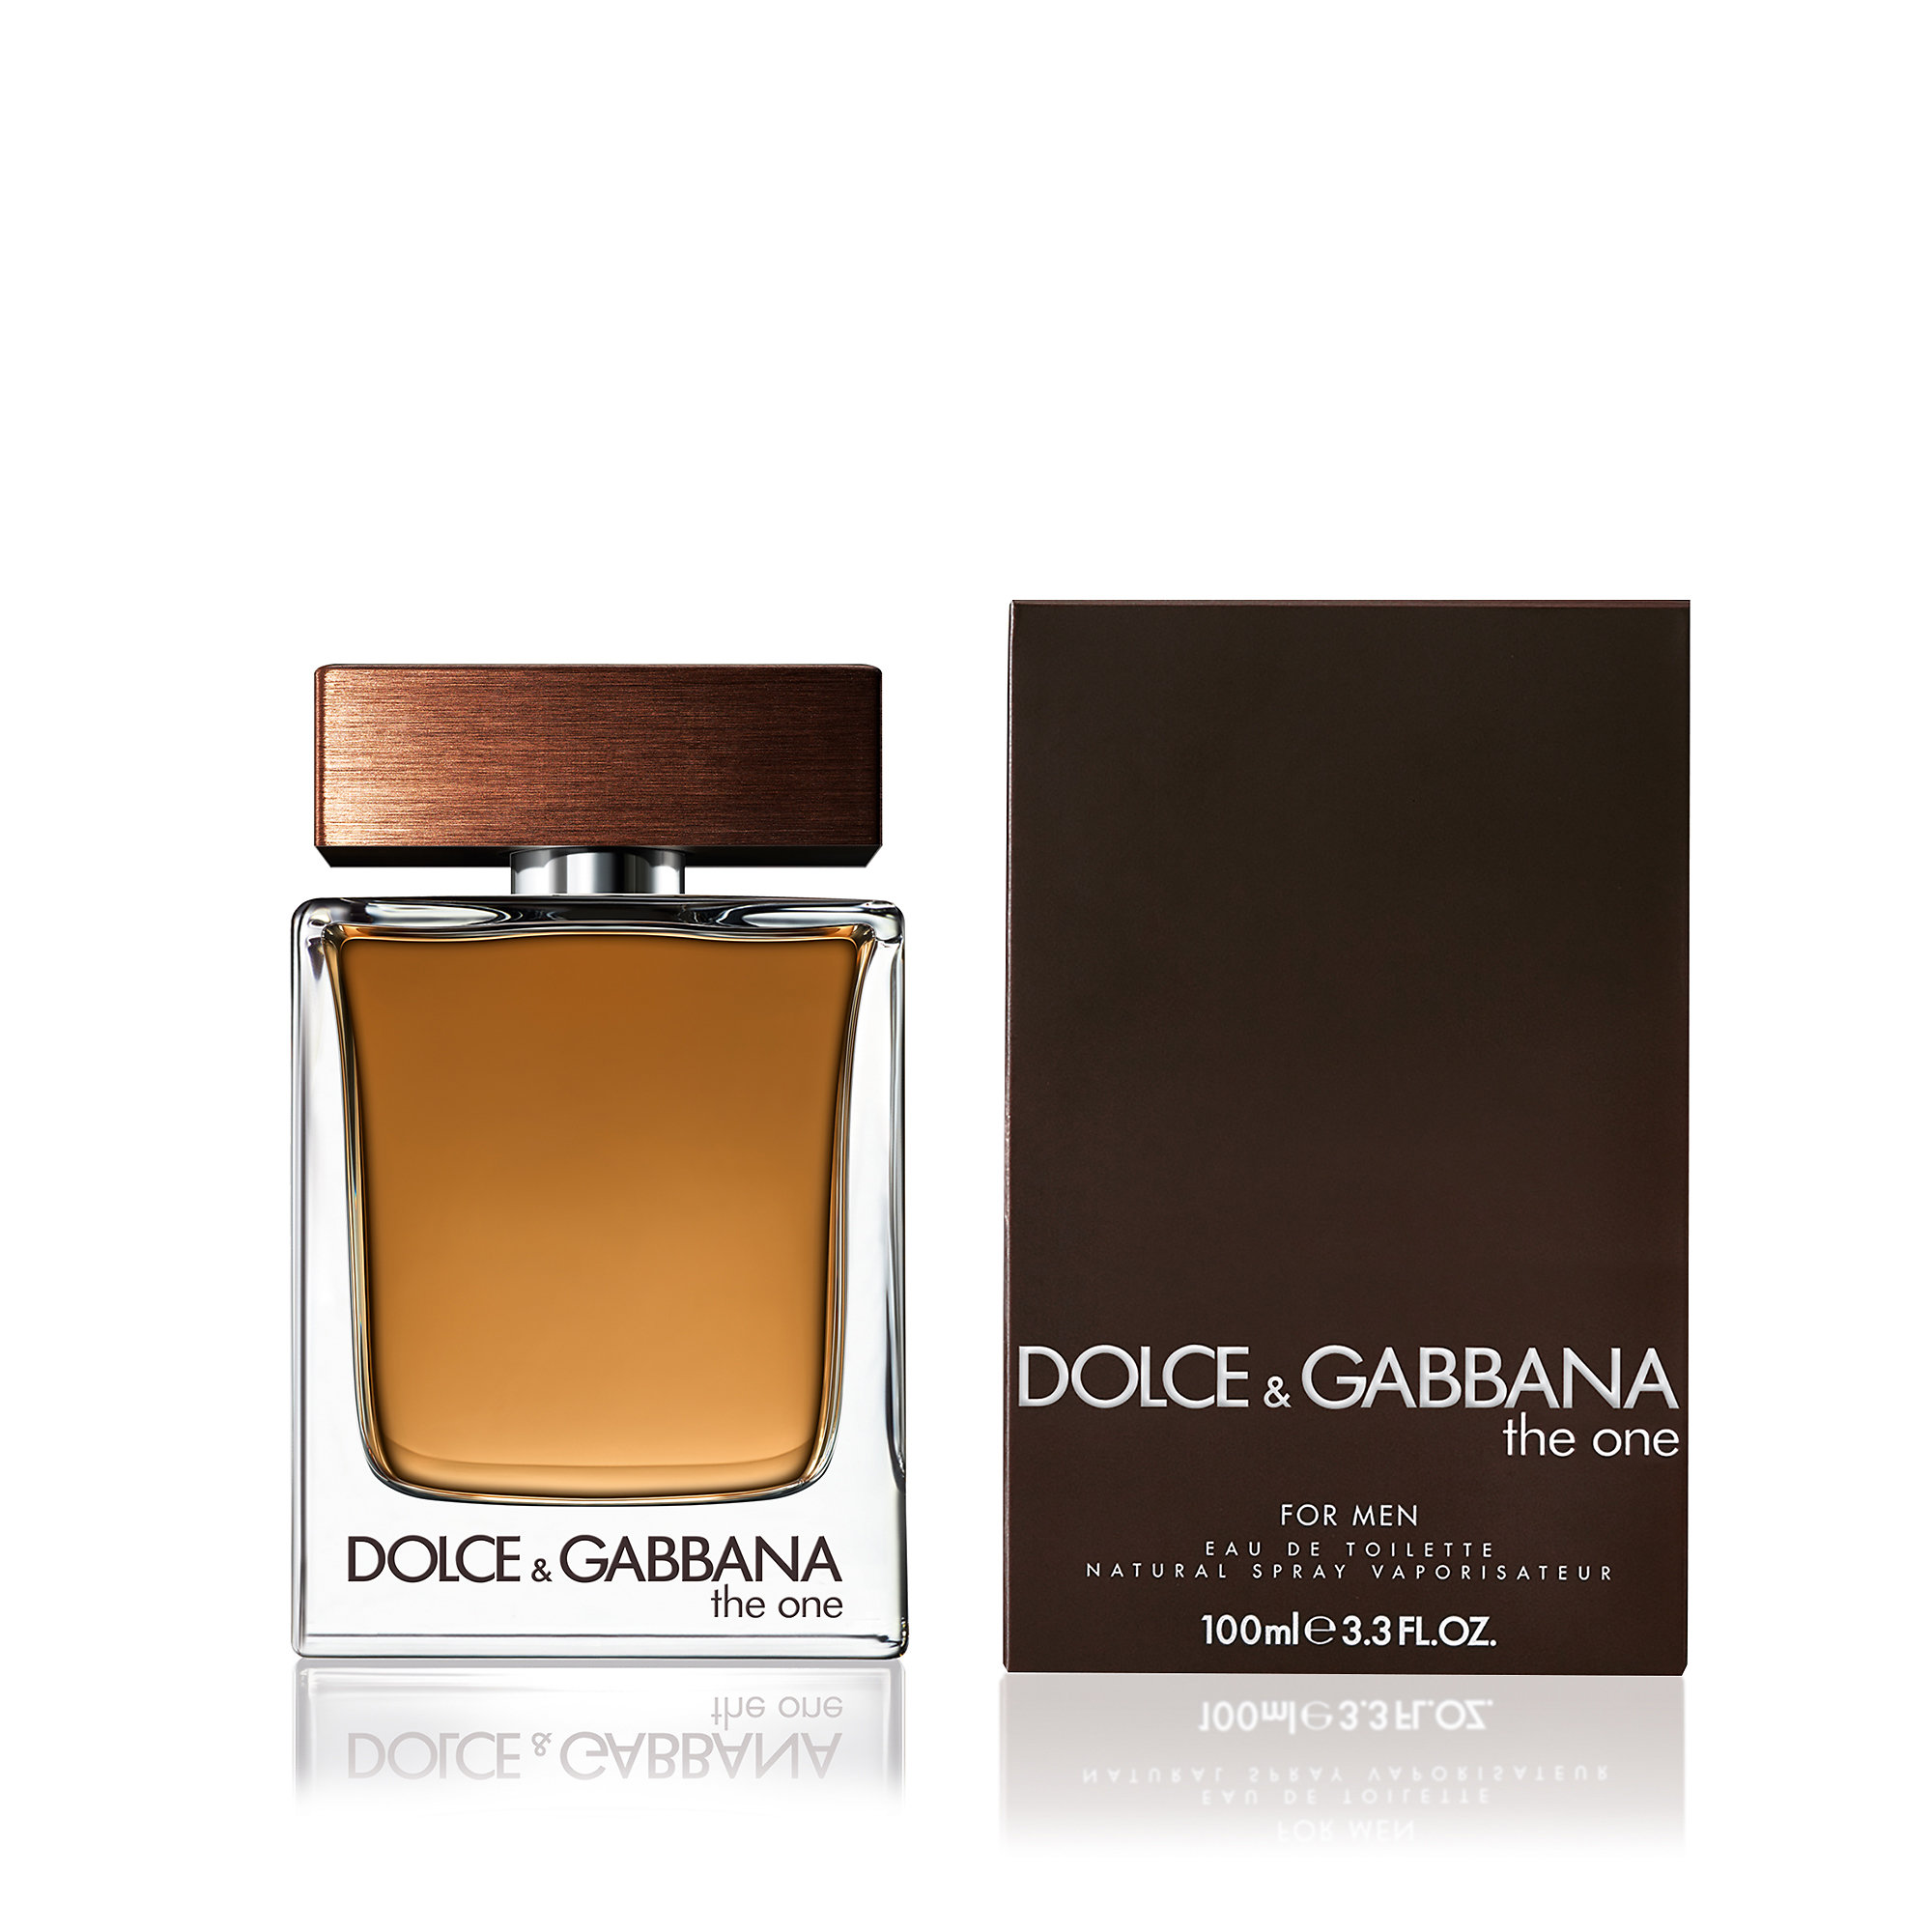 Купить Туалетная вода Dolce & Gabbana, Dolce & Gabbana The One For Men Eau De Toilette 30.0ml, Италия